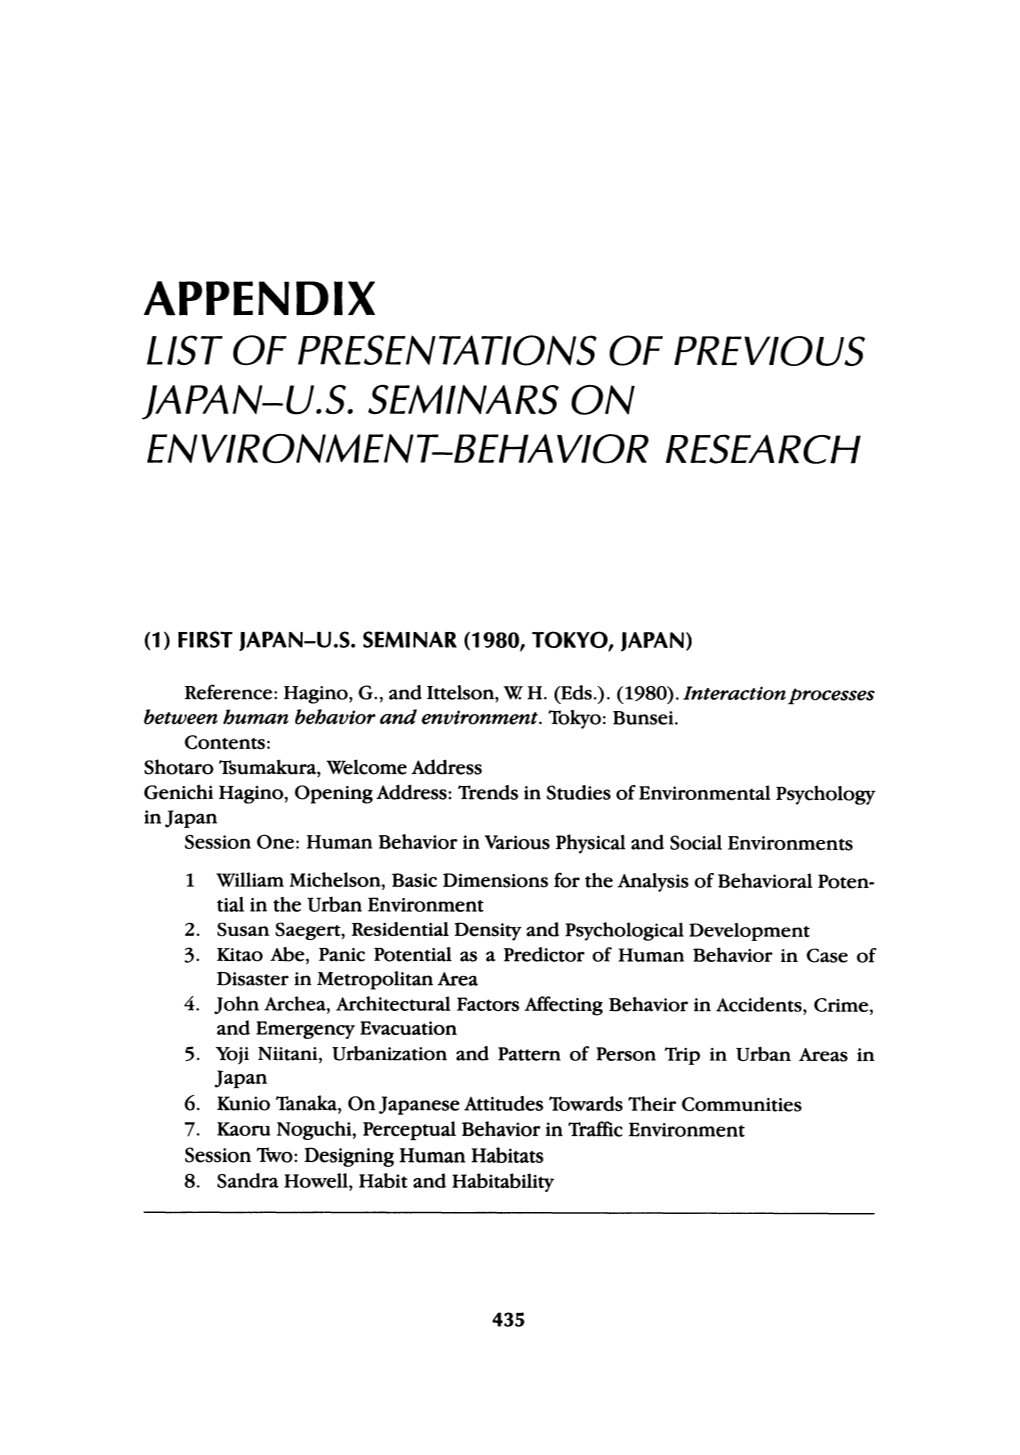 Appendix List of Presentations of Previous Japan-U.S